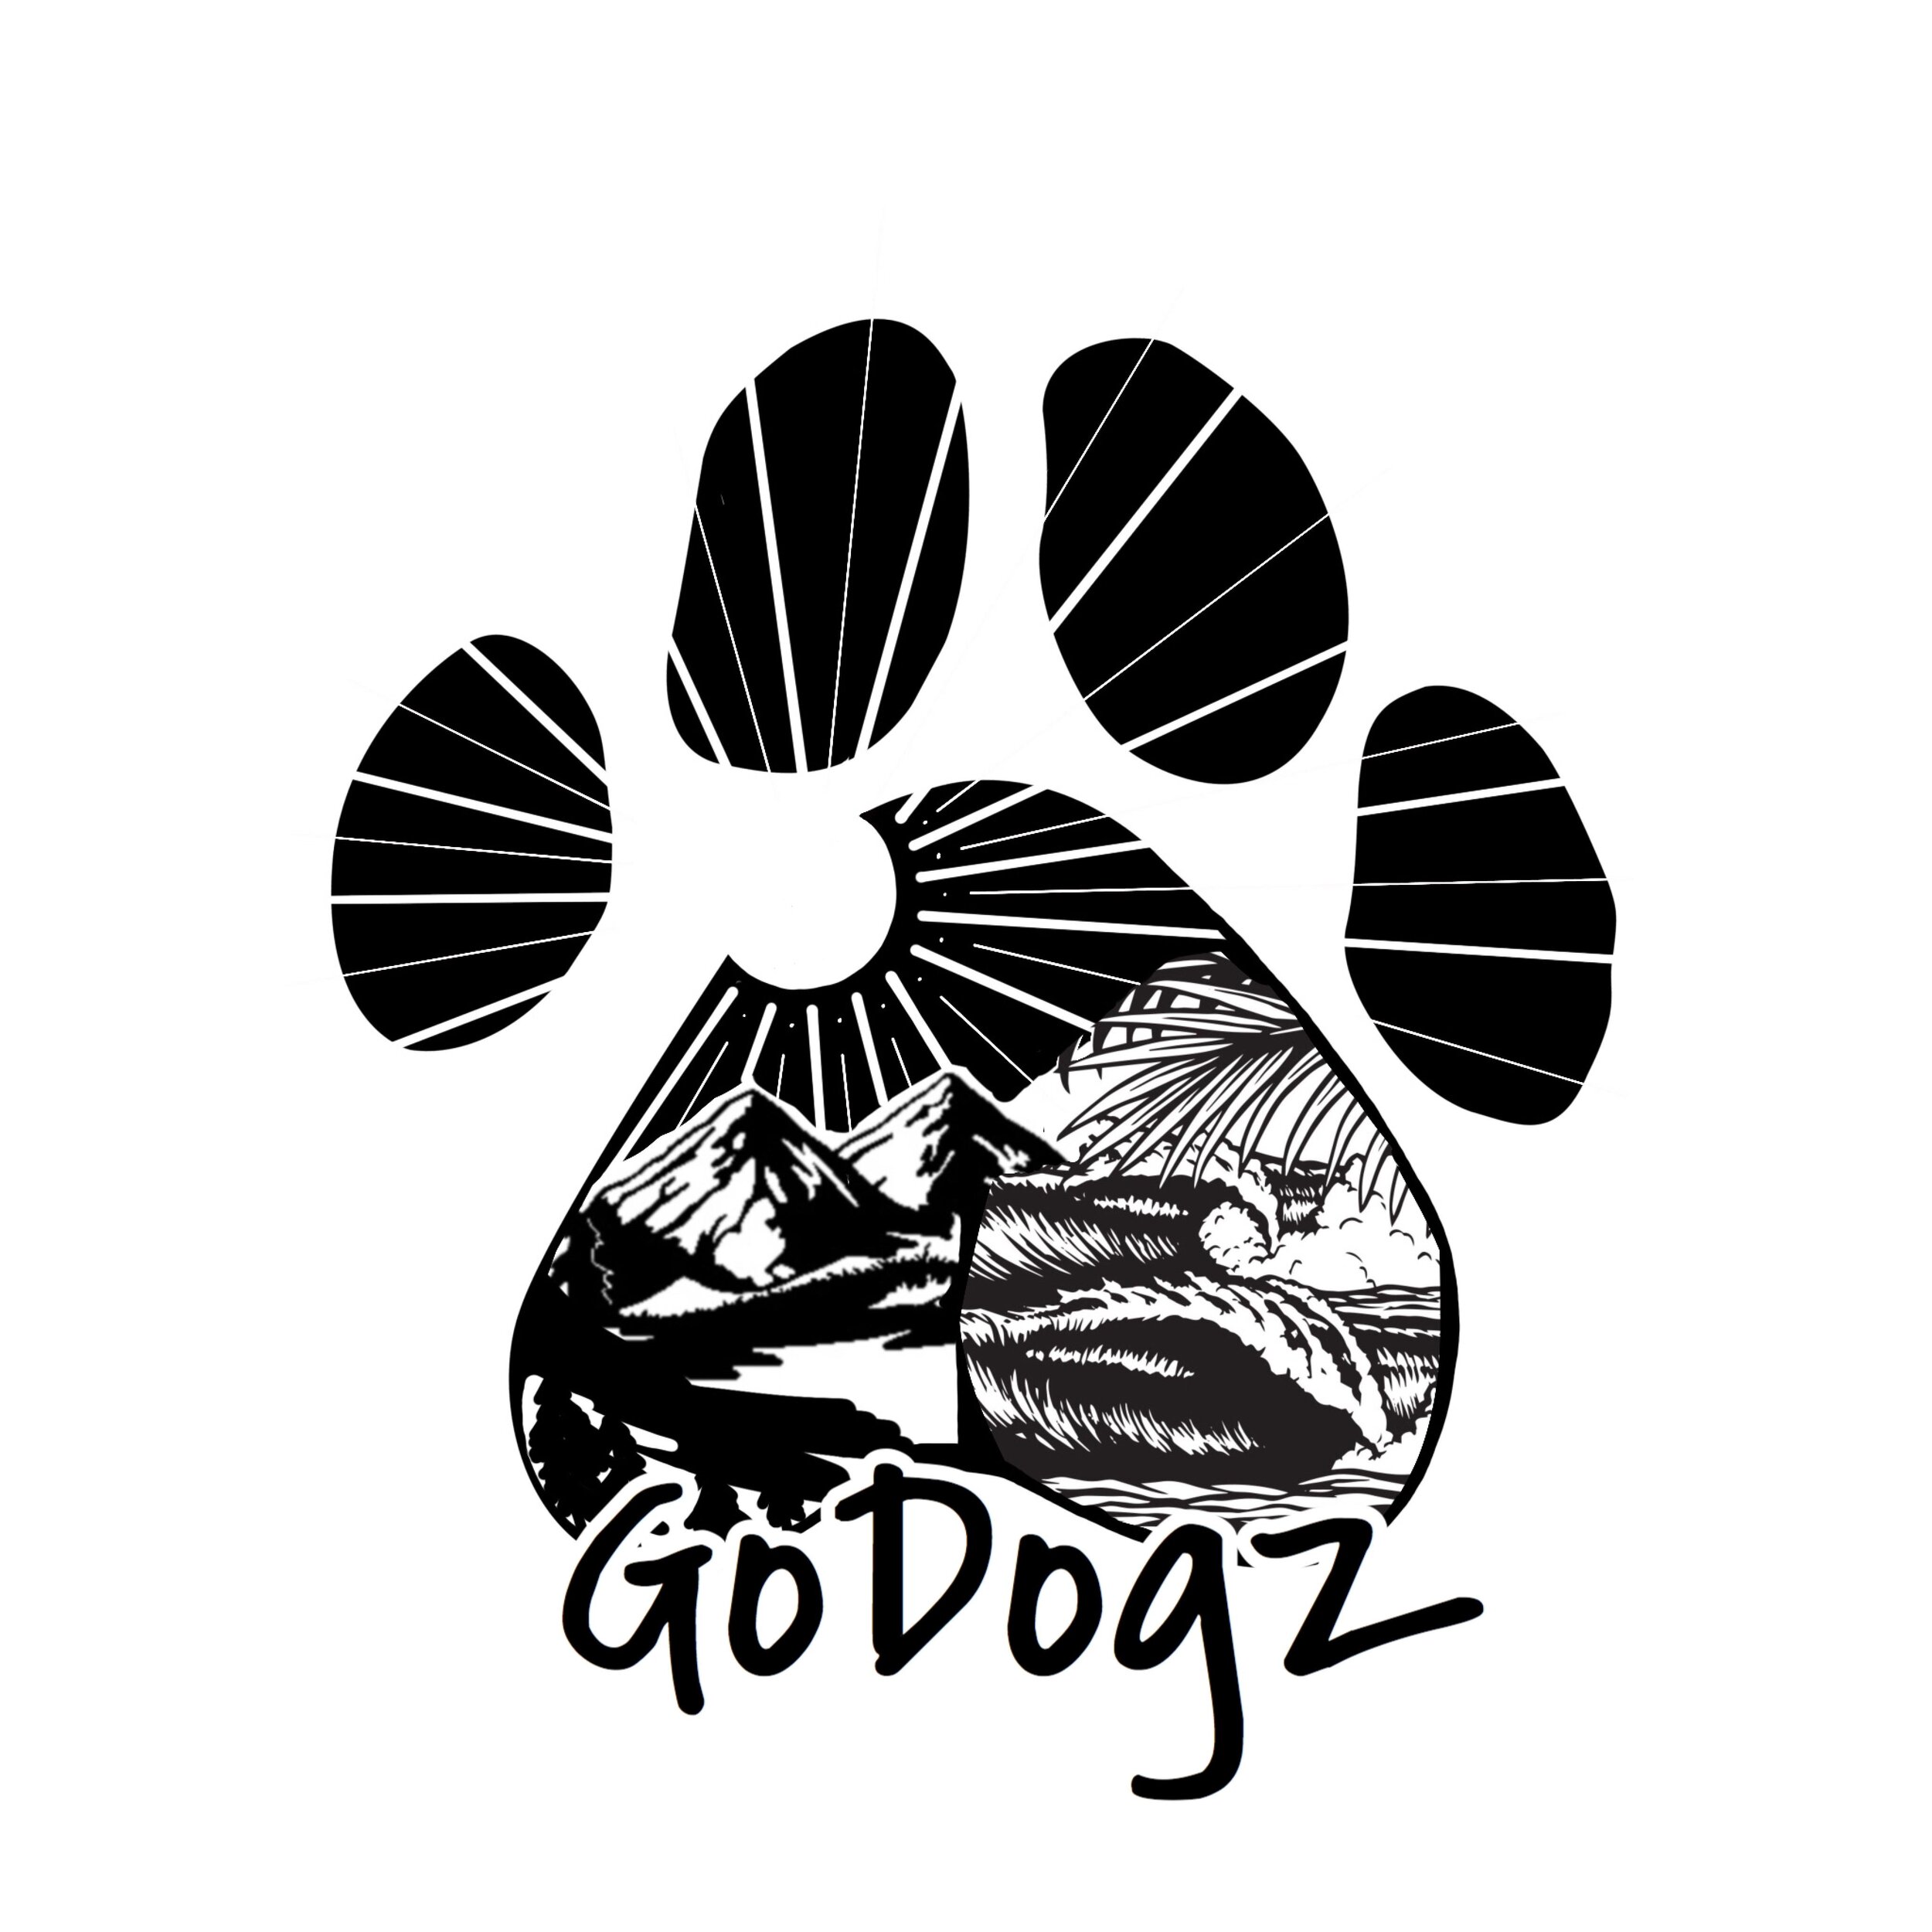 GoDogz, LLC